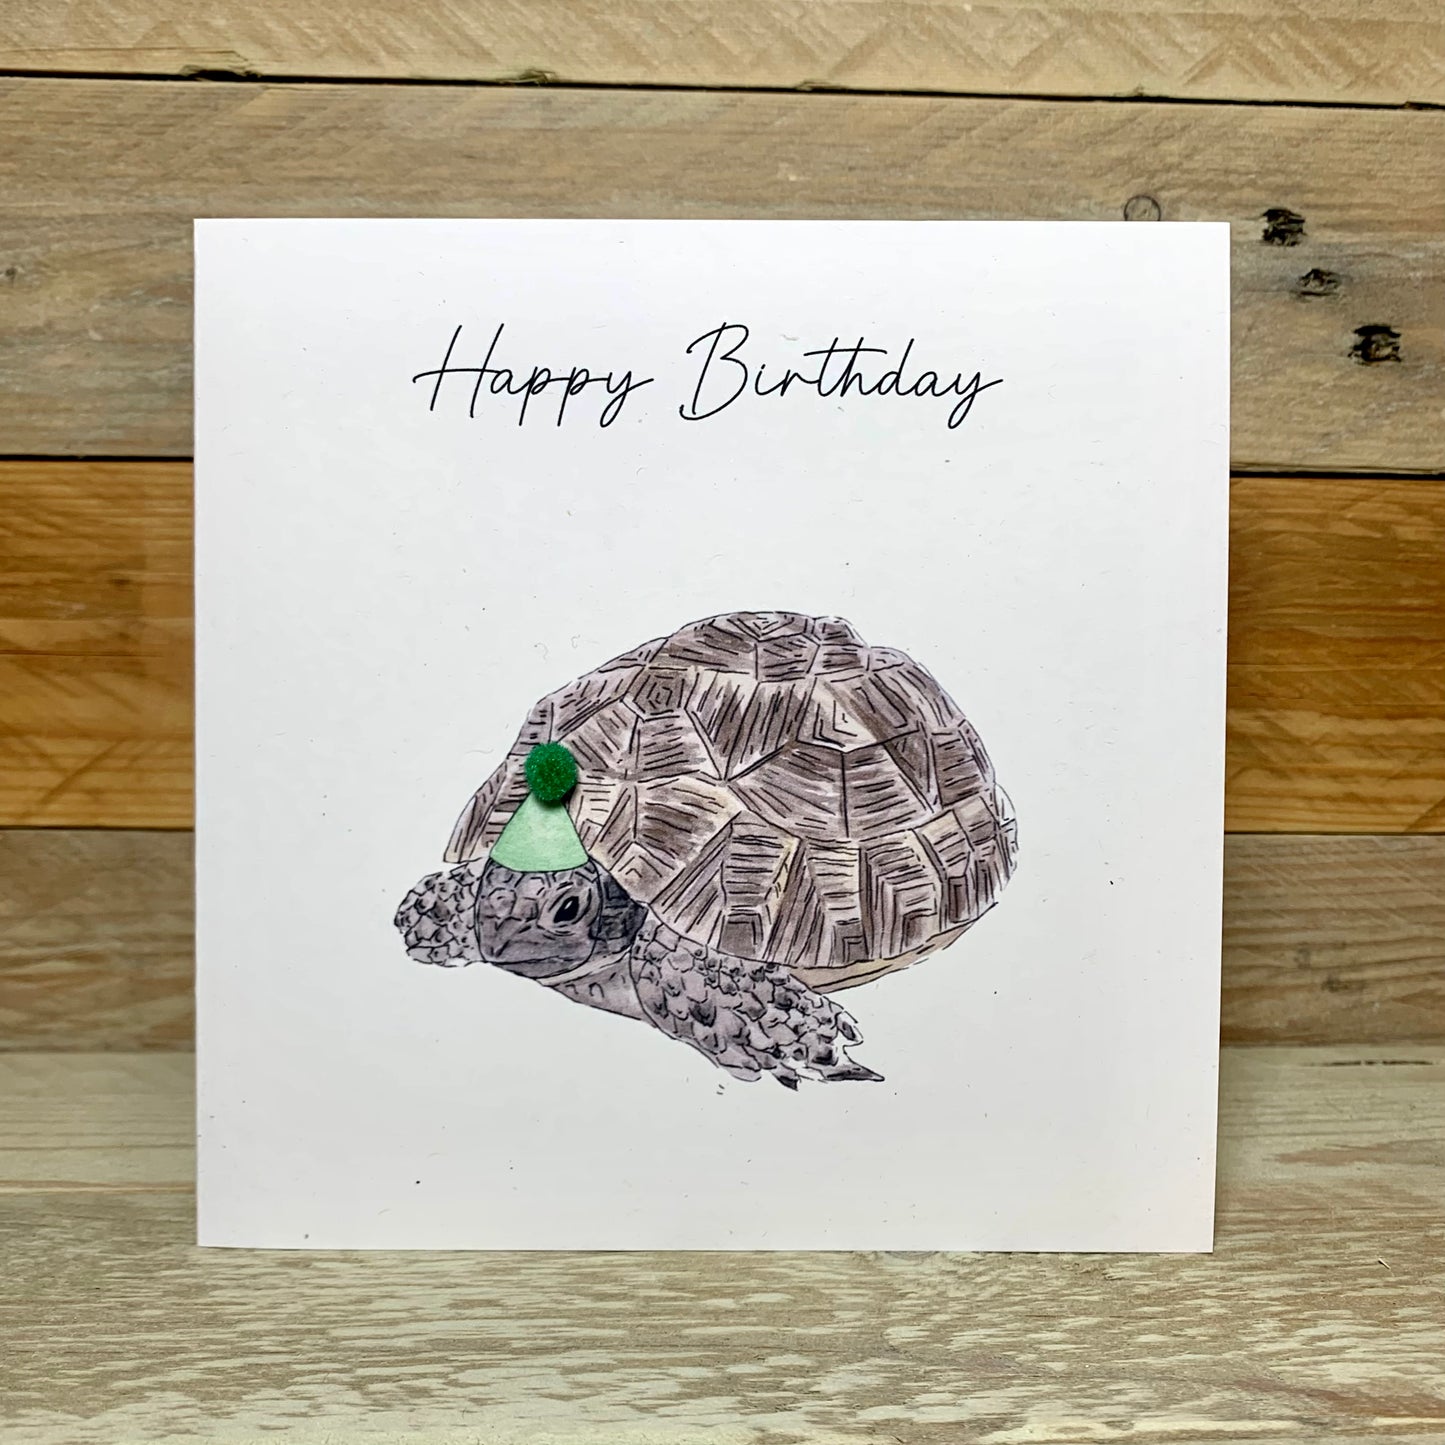 Tina the Tortoise Birthday card